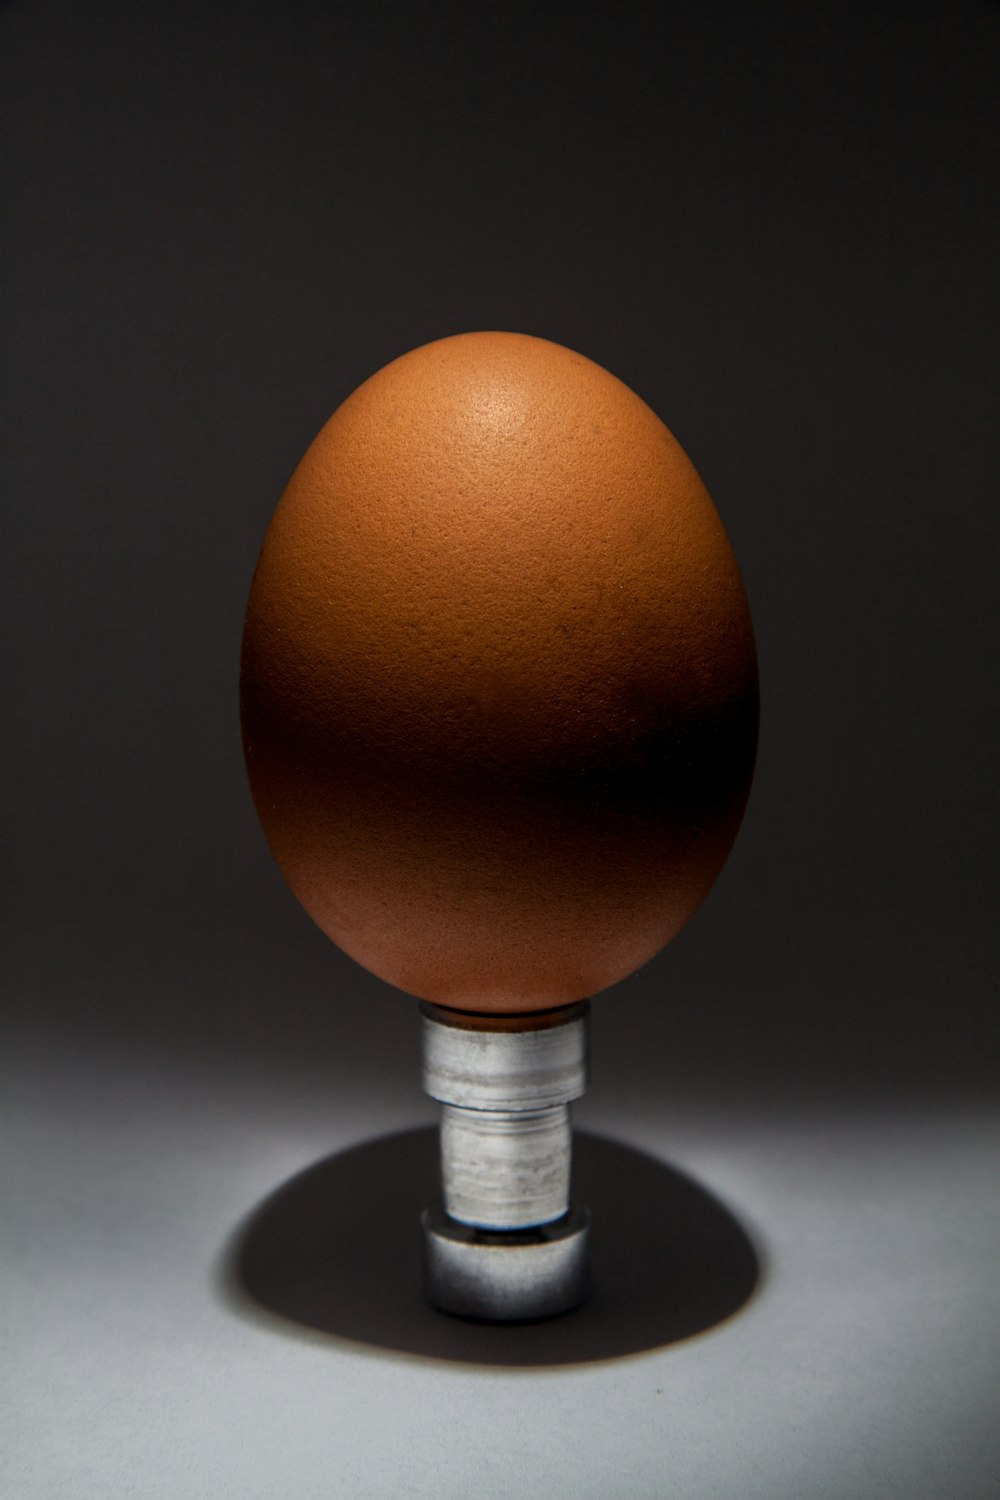 brown egg illustration